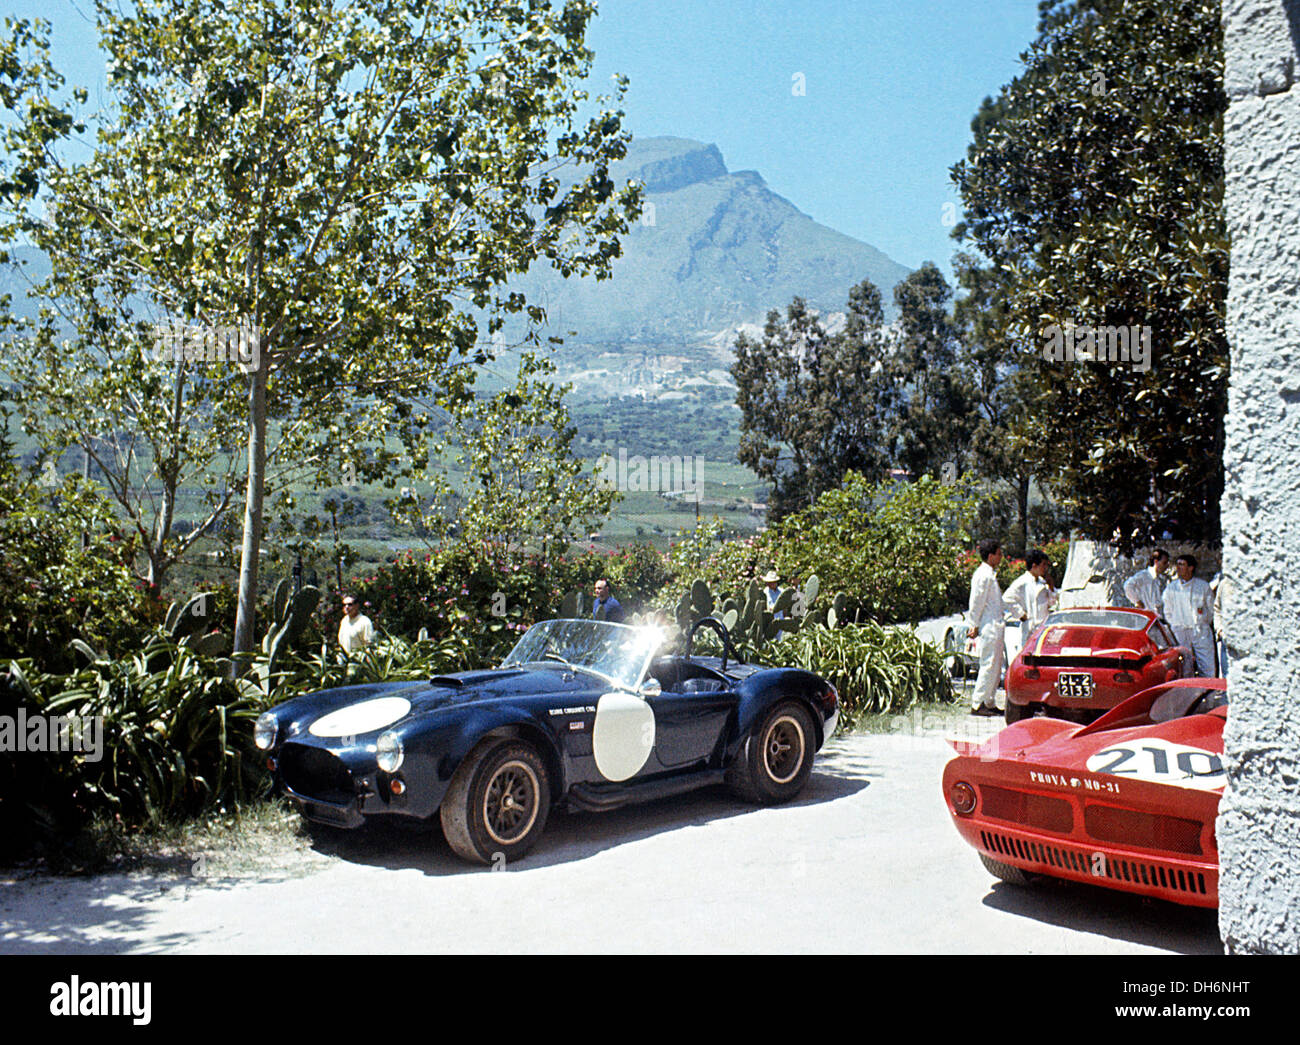 Ed Freutel-Tony Settember 7-Liter Shelby Cobra im Ruhestand aufgrund eines Unfalls. Targa Florio auf Sizilien 8. Mai 1966. Stockfoto